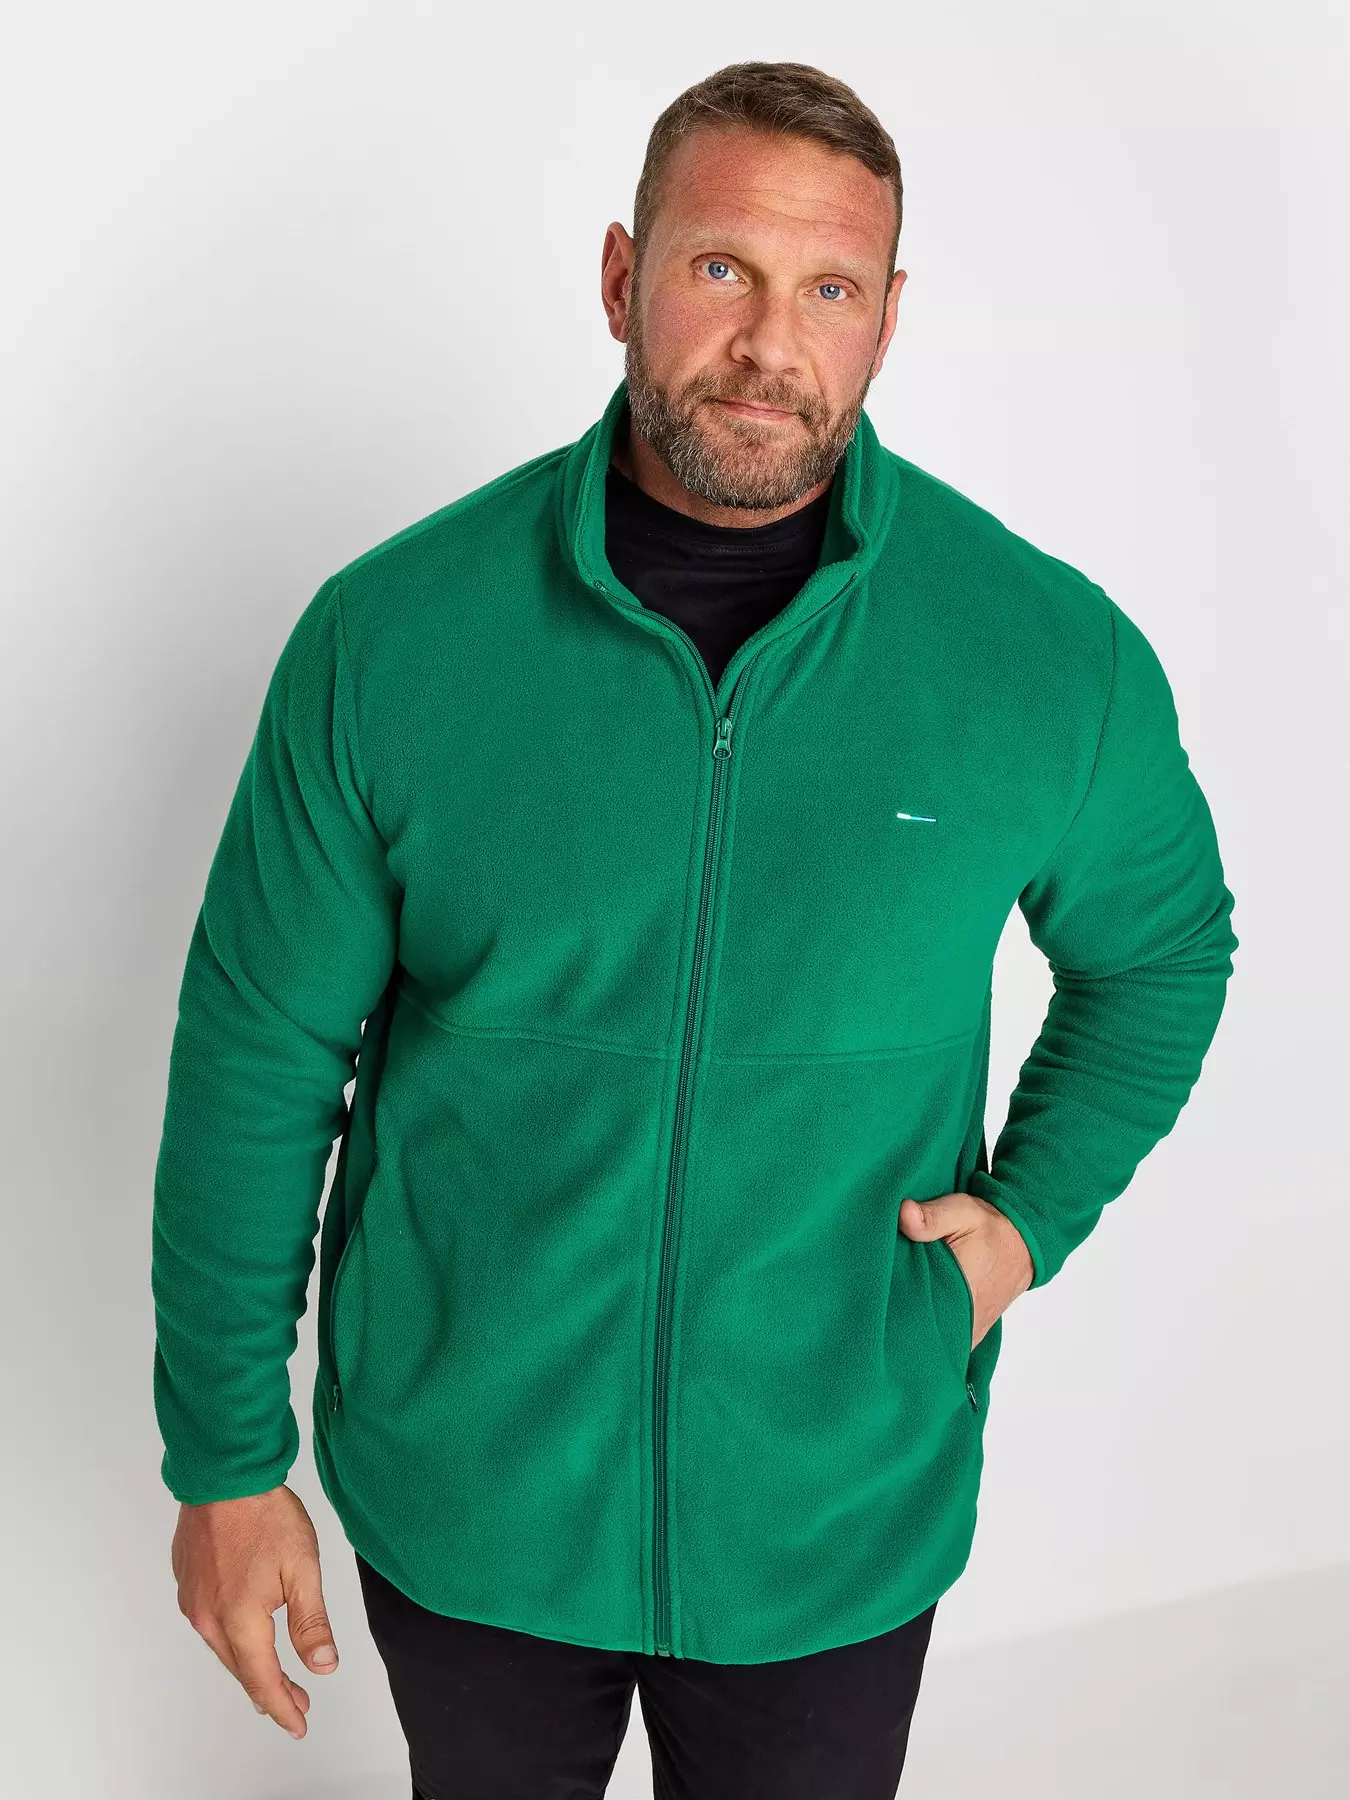 AMDBEL Mens Clothing Casual Stylish Warm Jackets For Men 4xl